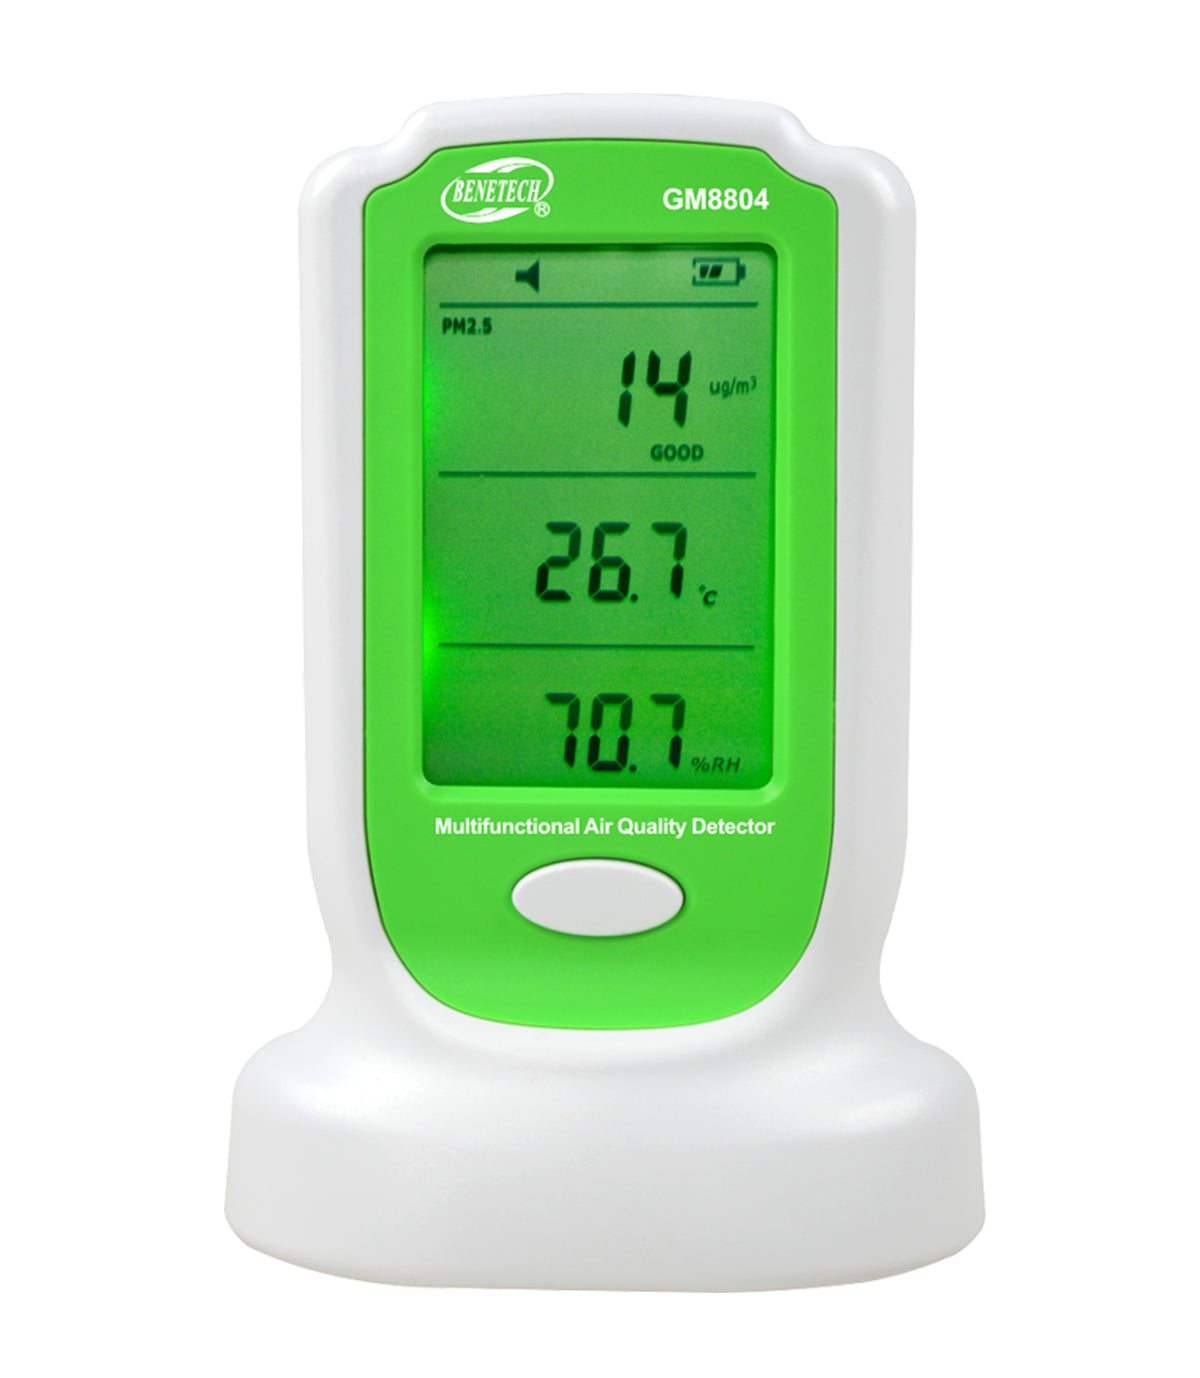 Benetech GM8804 Digital HCHO PM2.5 PM10 Air Quality Pollution Detector Formaldehyde Monitor air quality detector 0-5000ug/m3